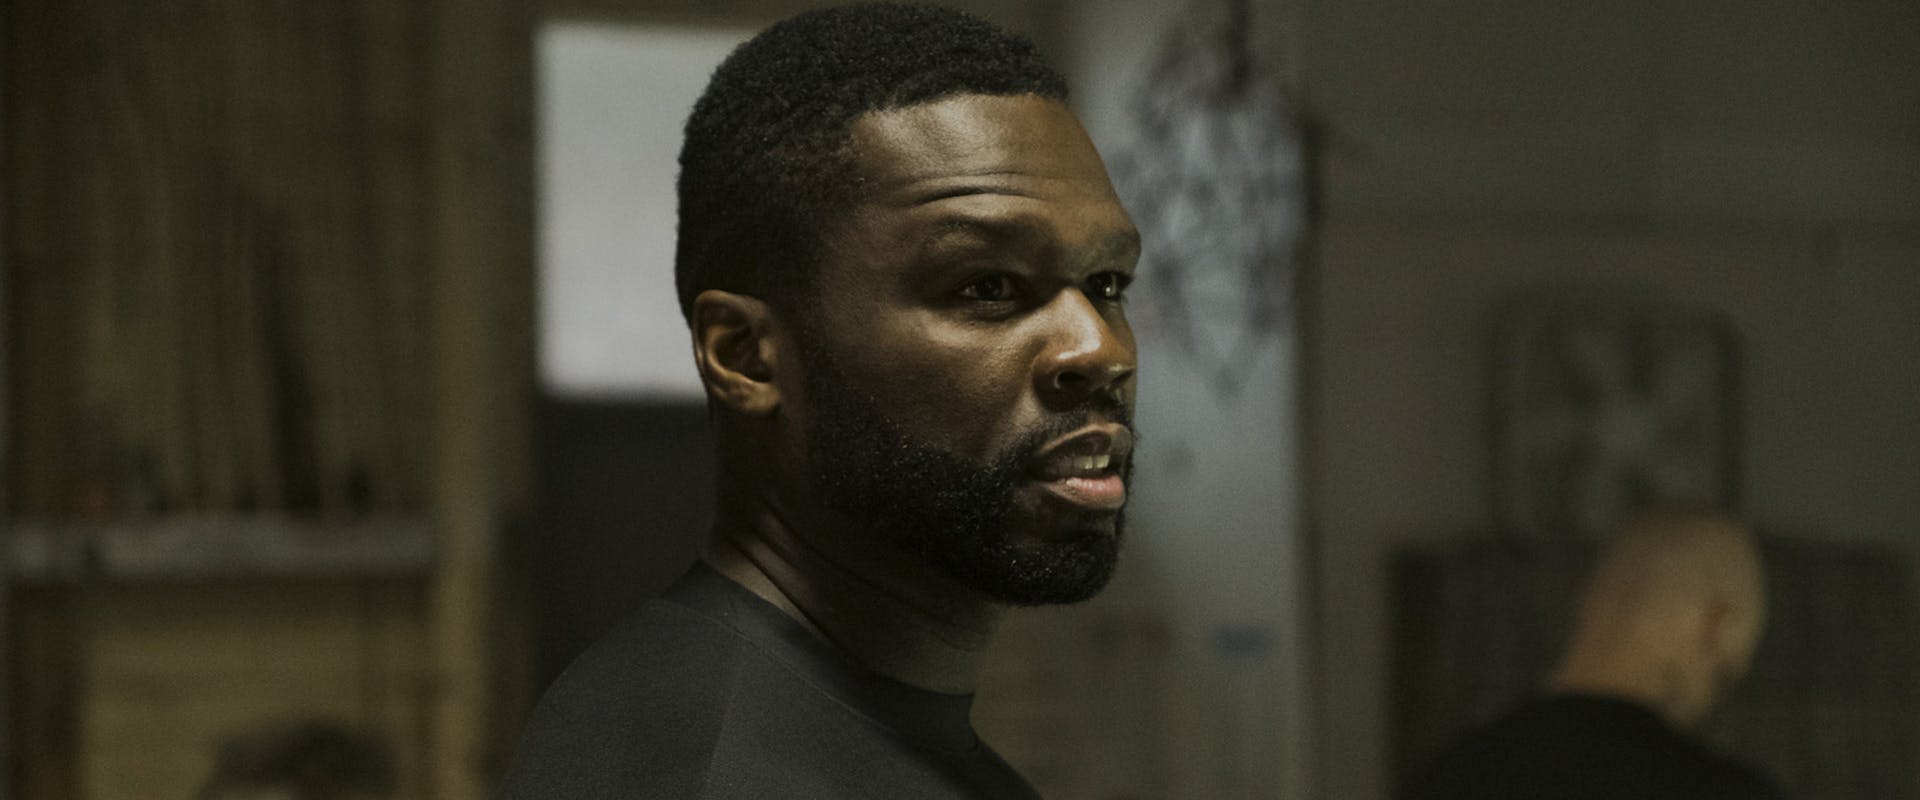 Rapper/actor/producer Curtis "50 Cent" Jackson